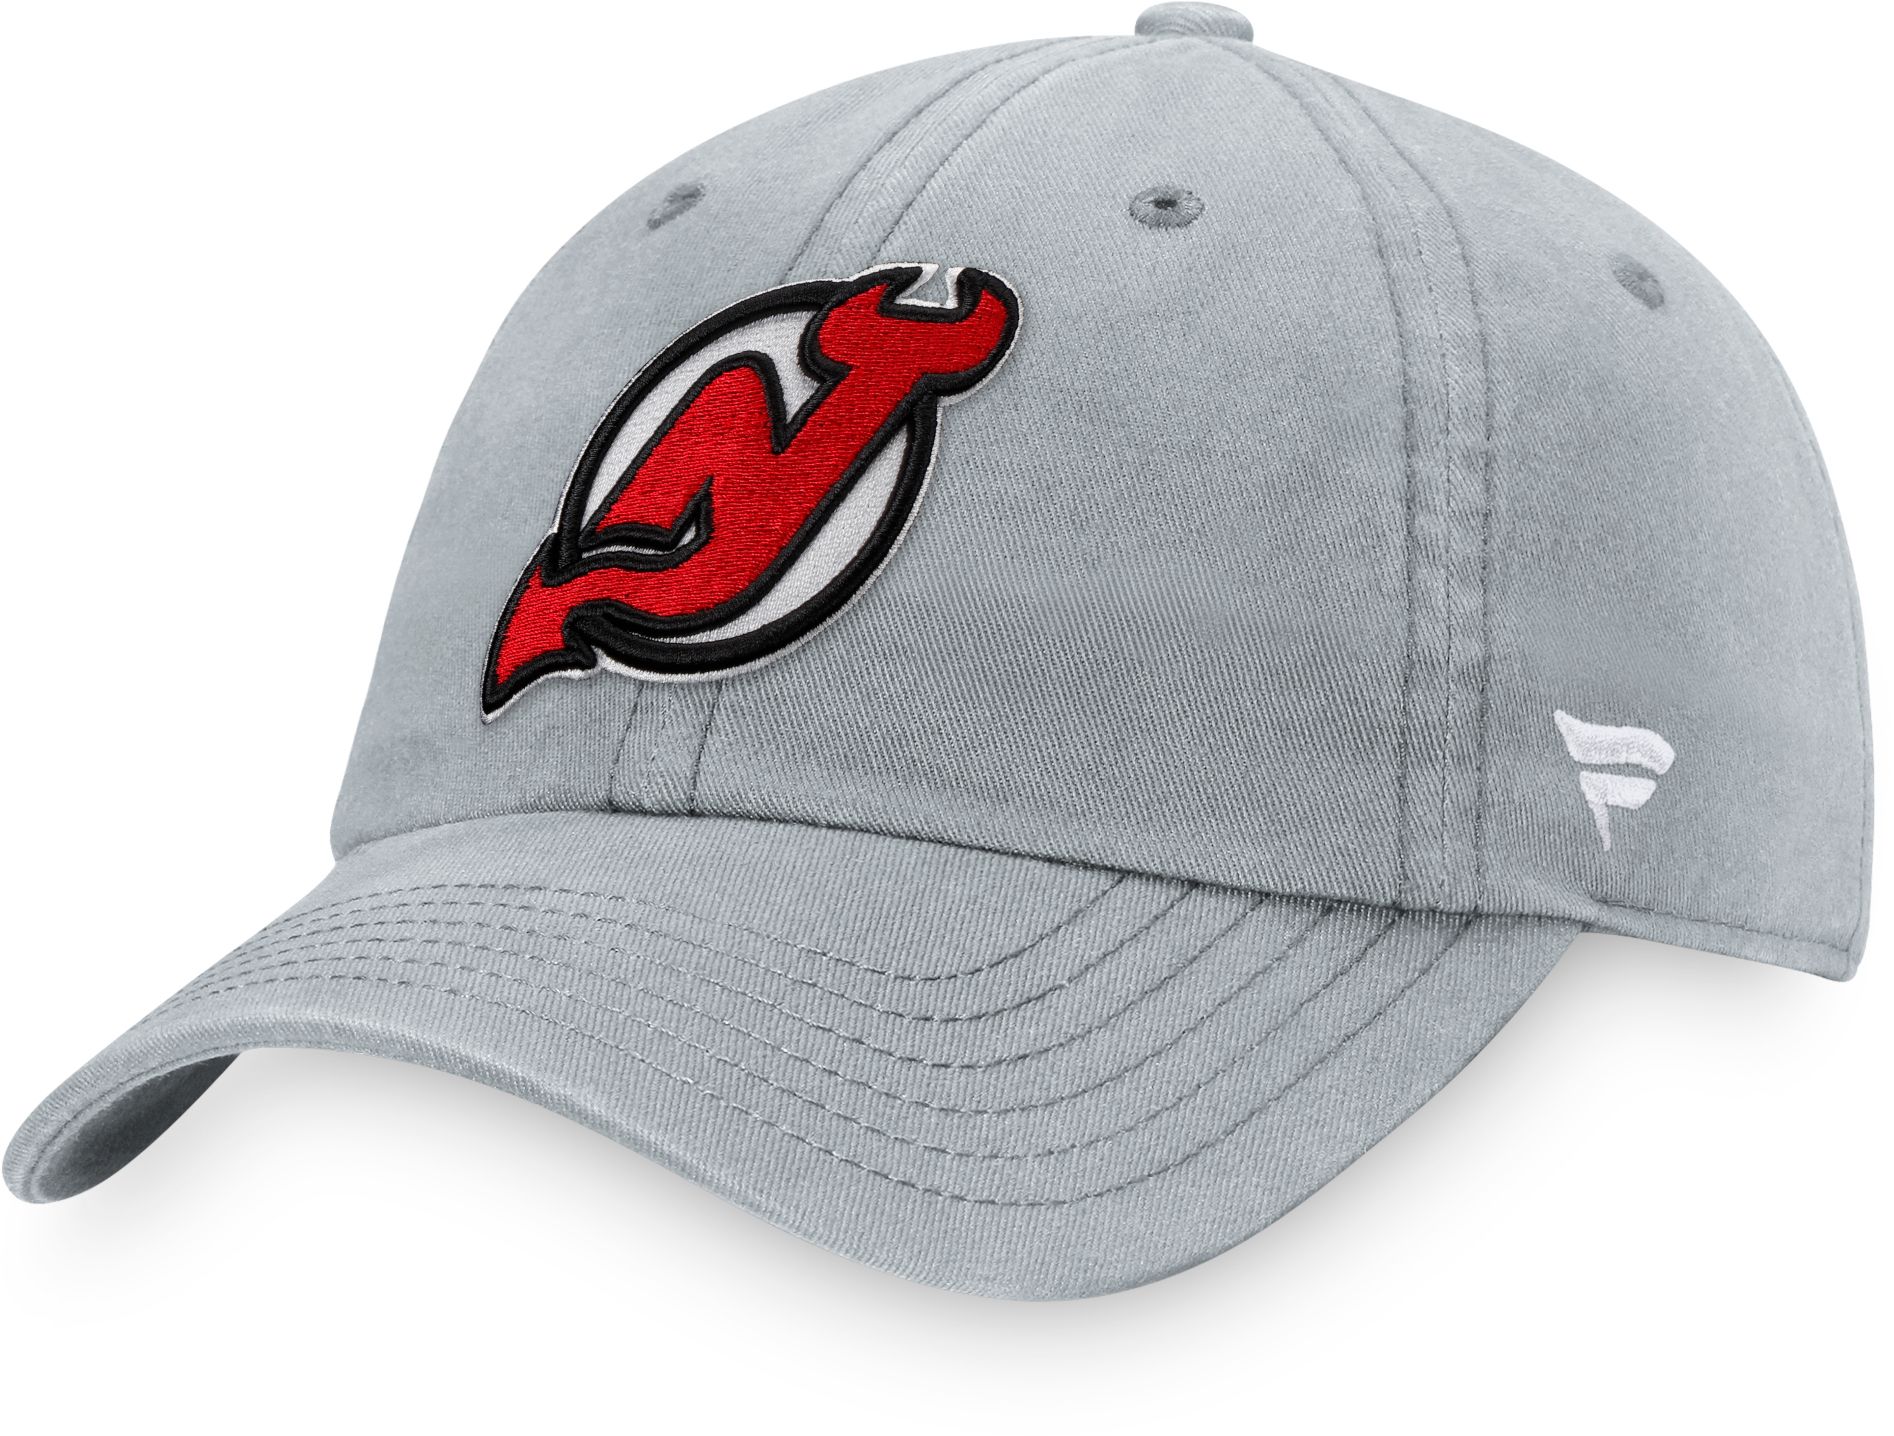 NHL Men's Washington Capitals Core Red Adjustable Hat